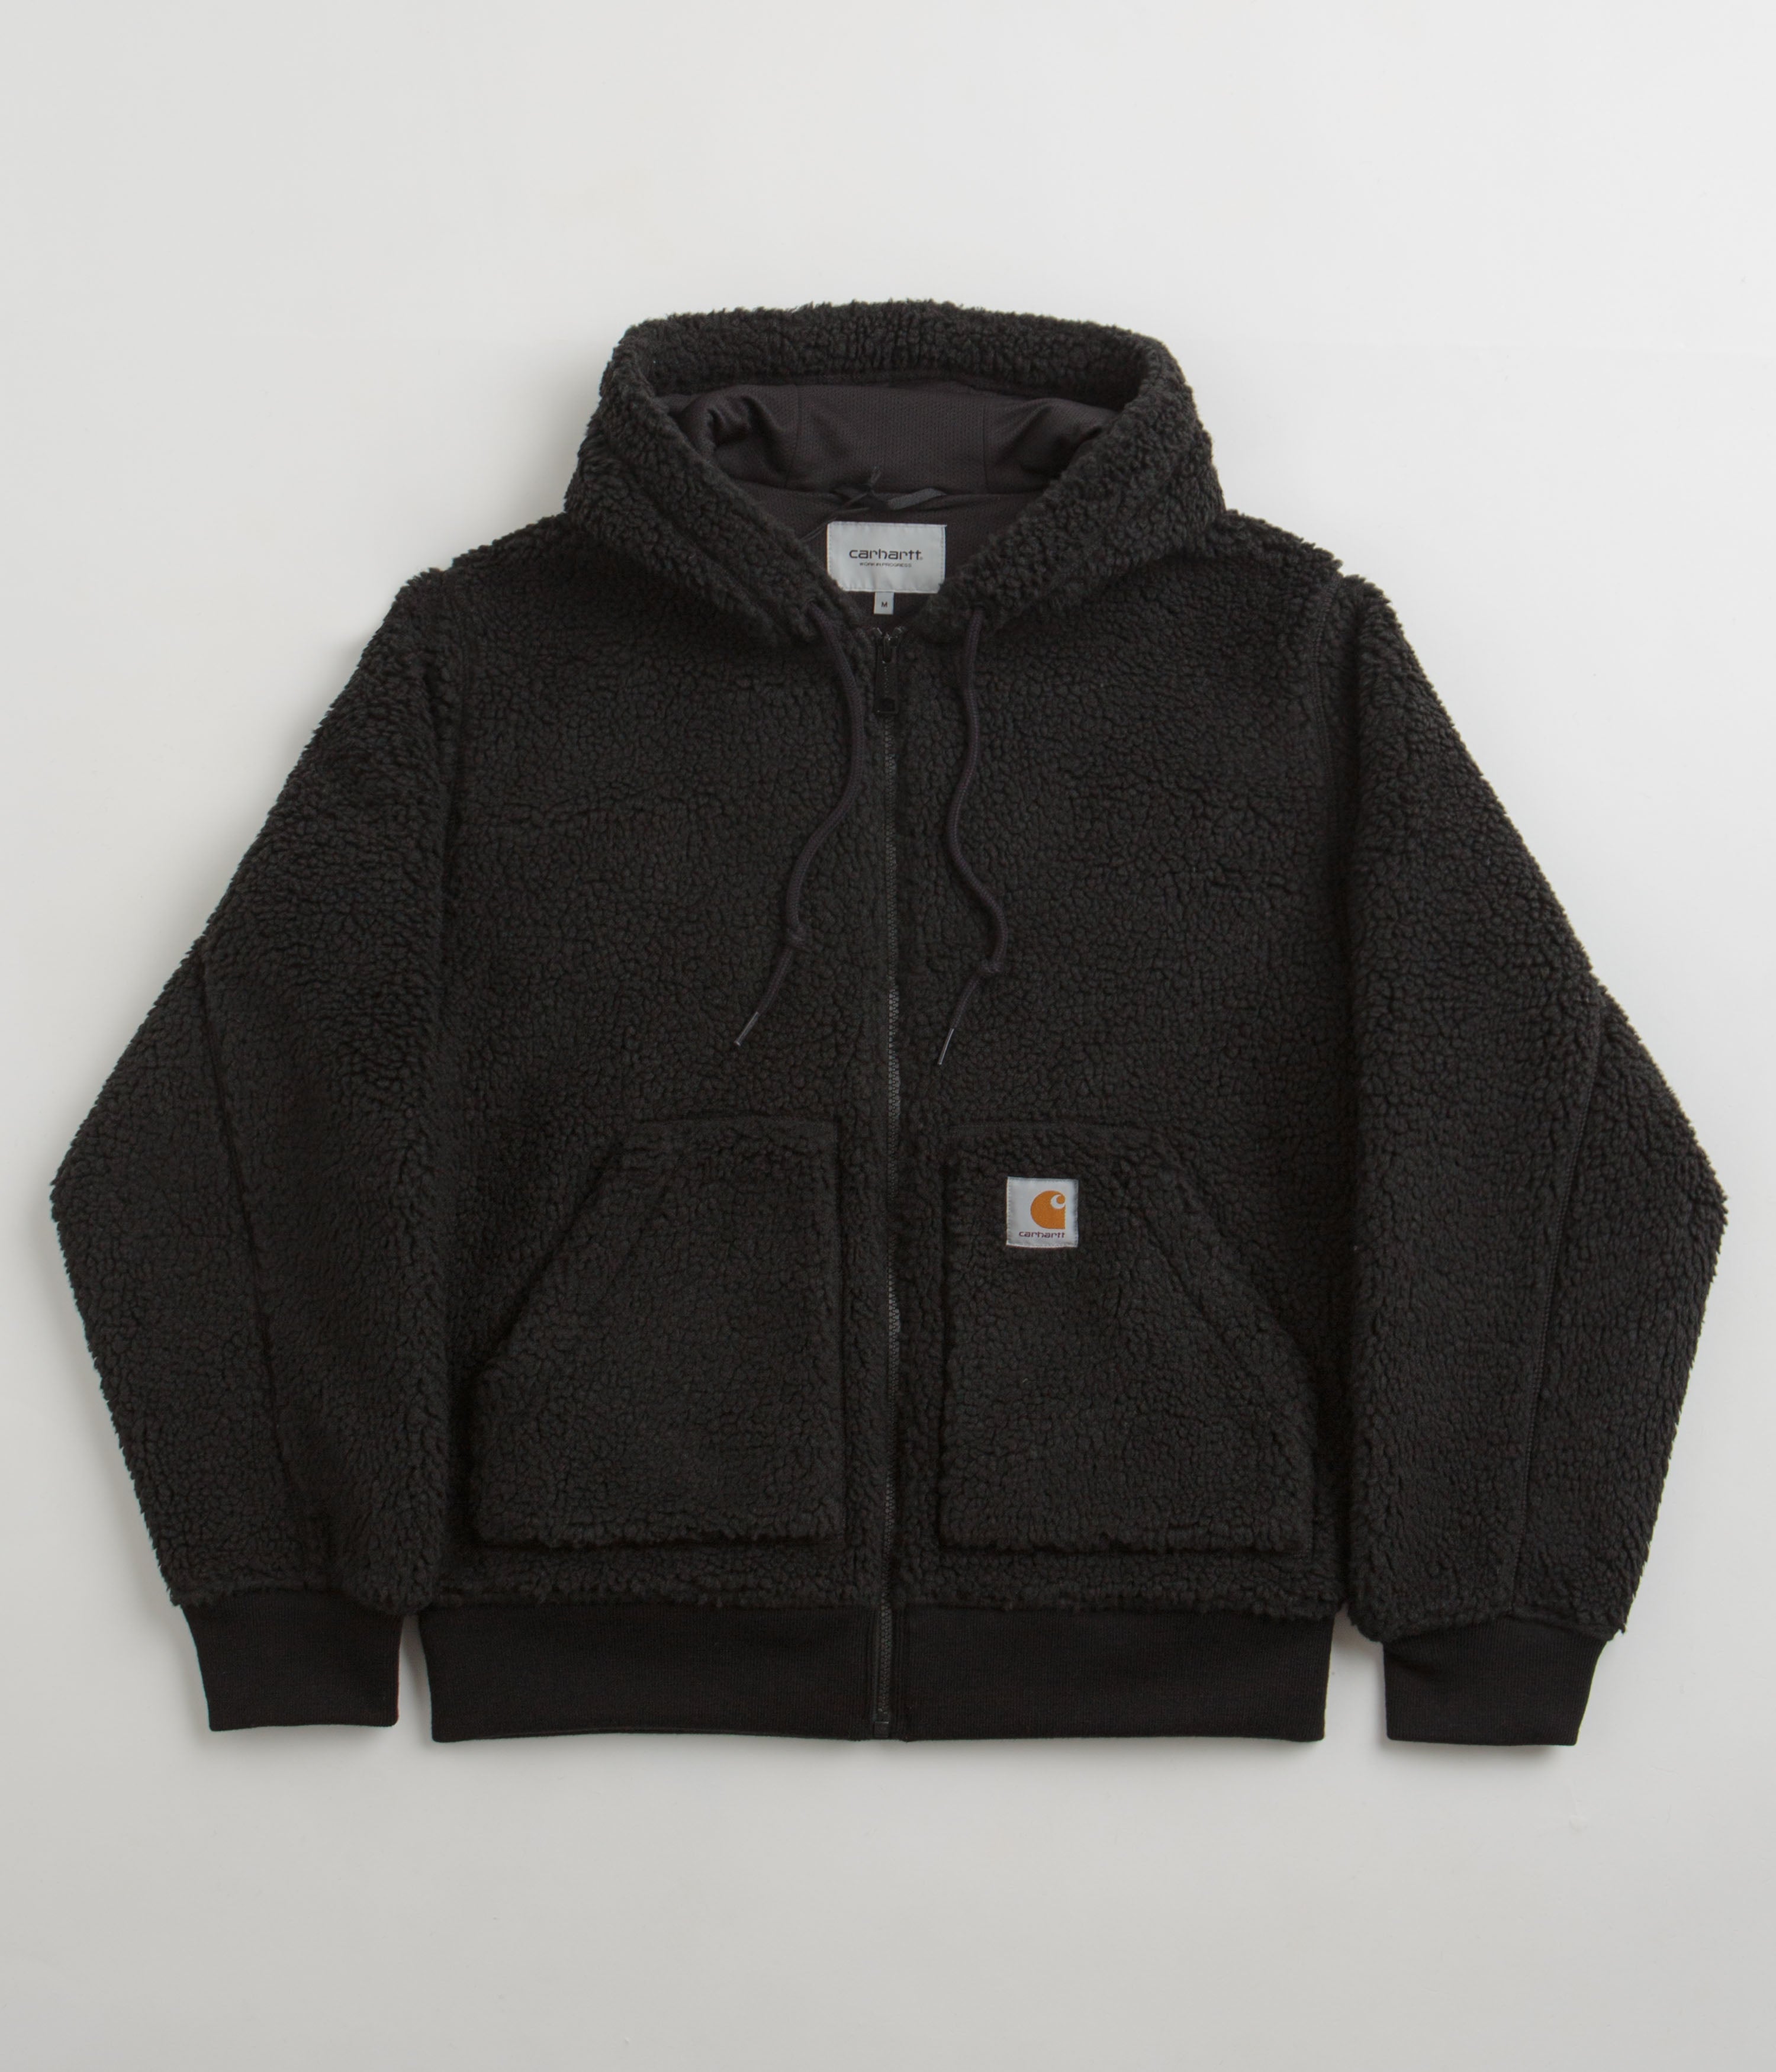 STYLAND hooded organic cotton jacket - Black